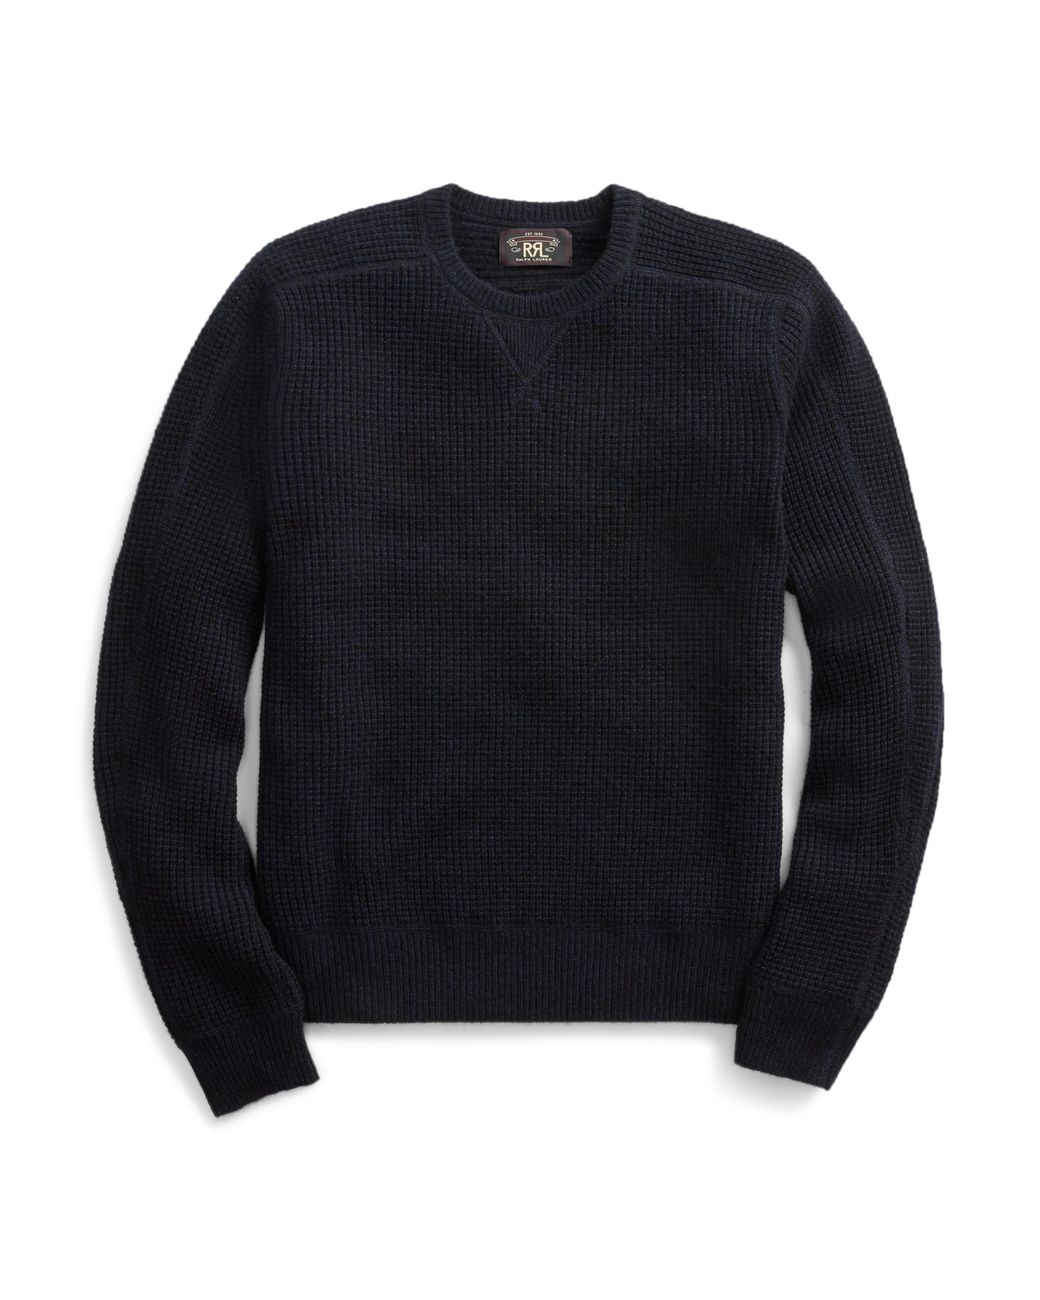 RRL Waffle-knit Cashmere Jumper in Navy (Blue) for Men - Lyst